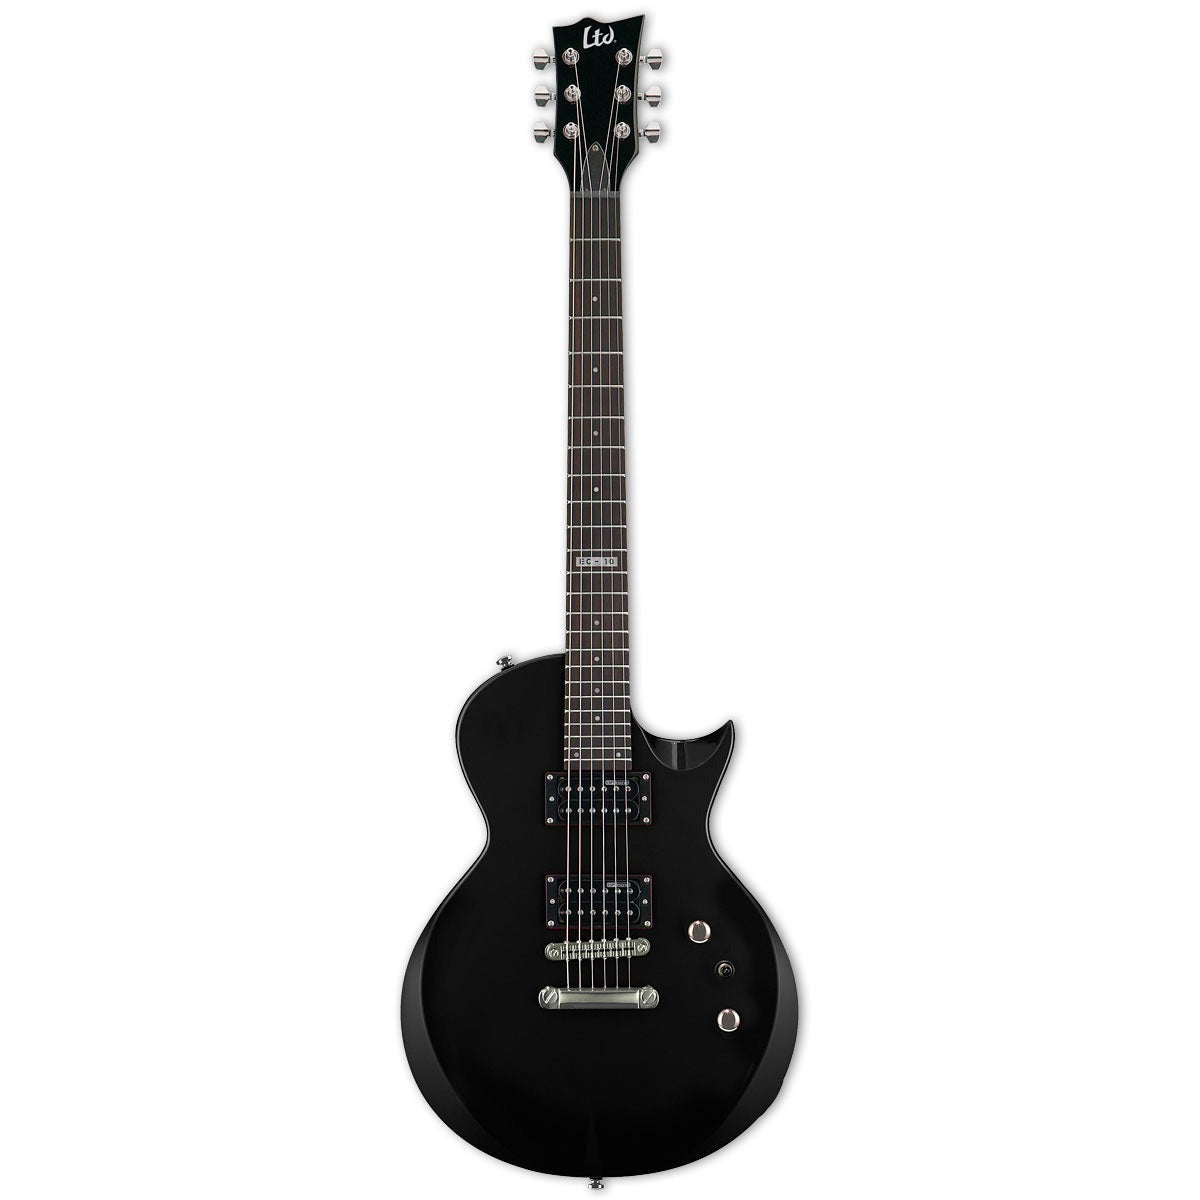 ESP EC-10 6 String Electric Guitar - Black (With Bag)